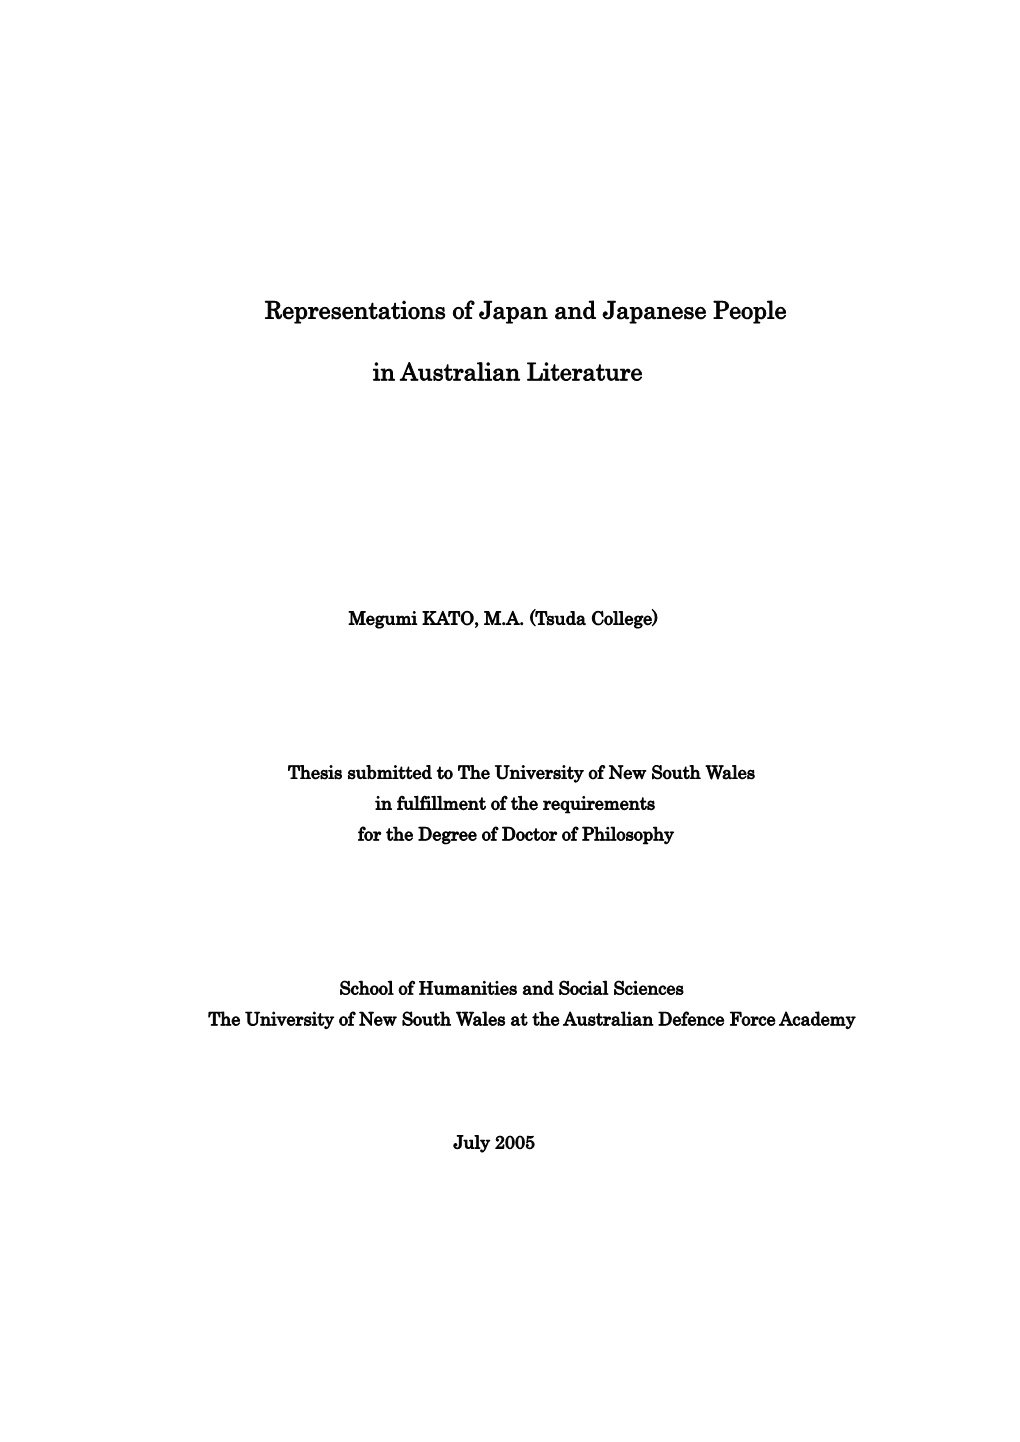 Representations of Japan and Japanese People in Australian Literature